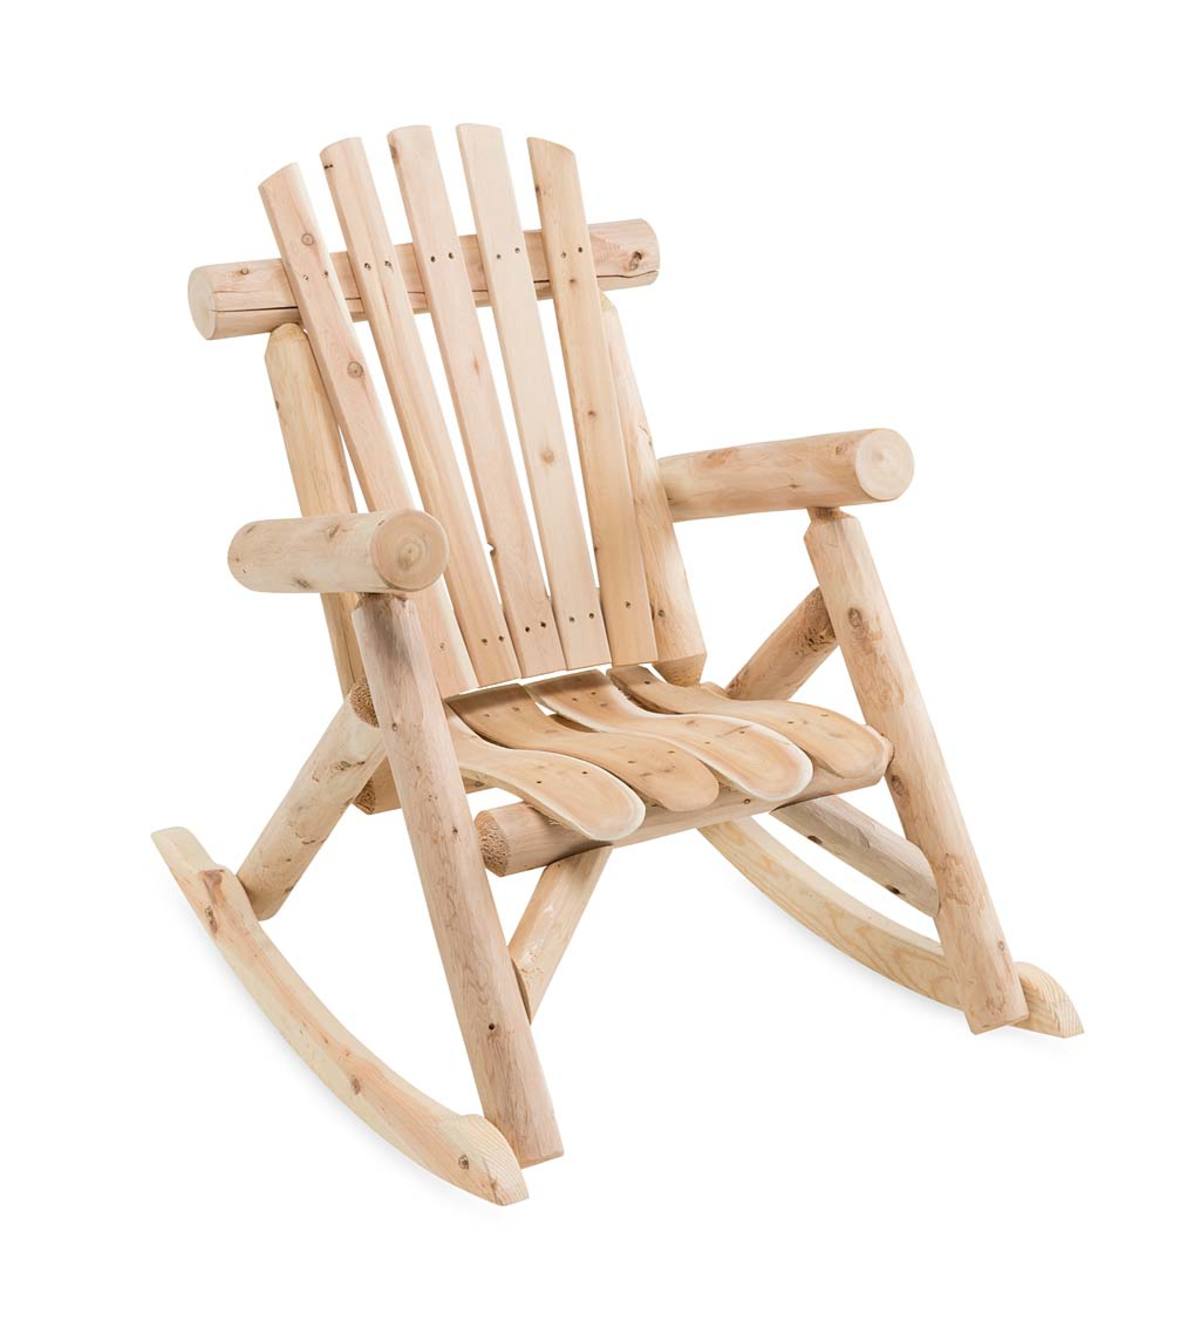 Northern White Cedar Outdoor Rocking Chair Plowhearth